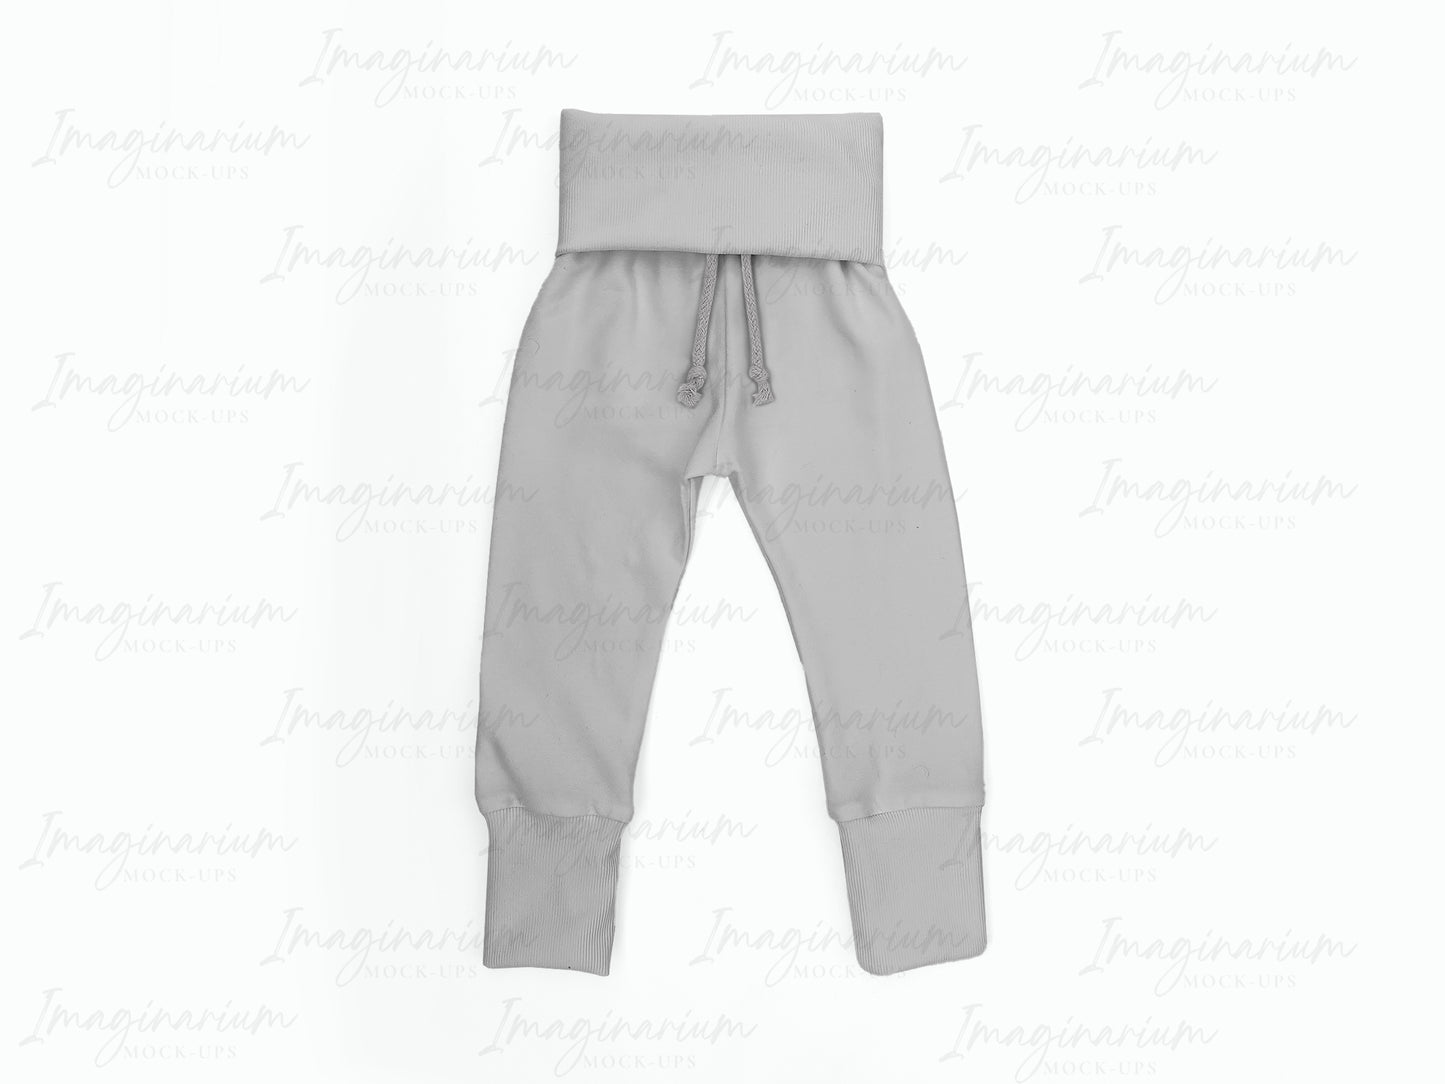 Lowland Lounge Sweats Mockup, Folded Fabric Waist Pants Mock Up, Realistic Clothing Mock-up for Photoshop and Procreate